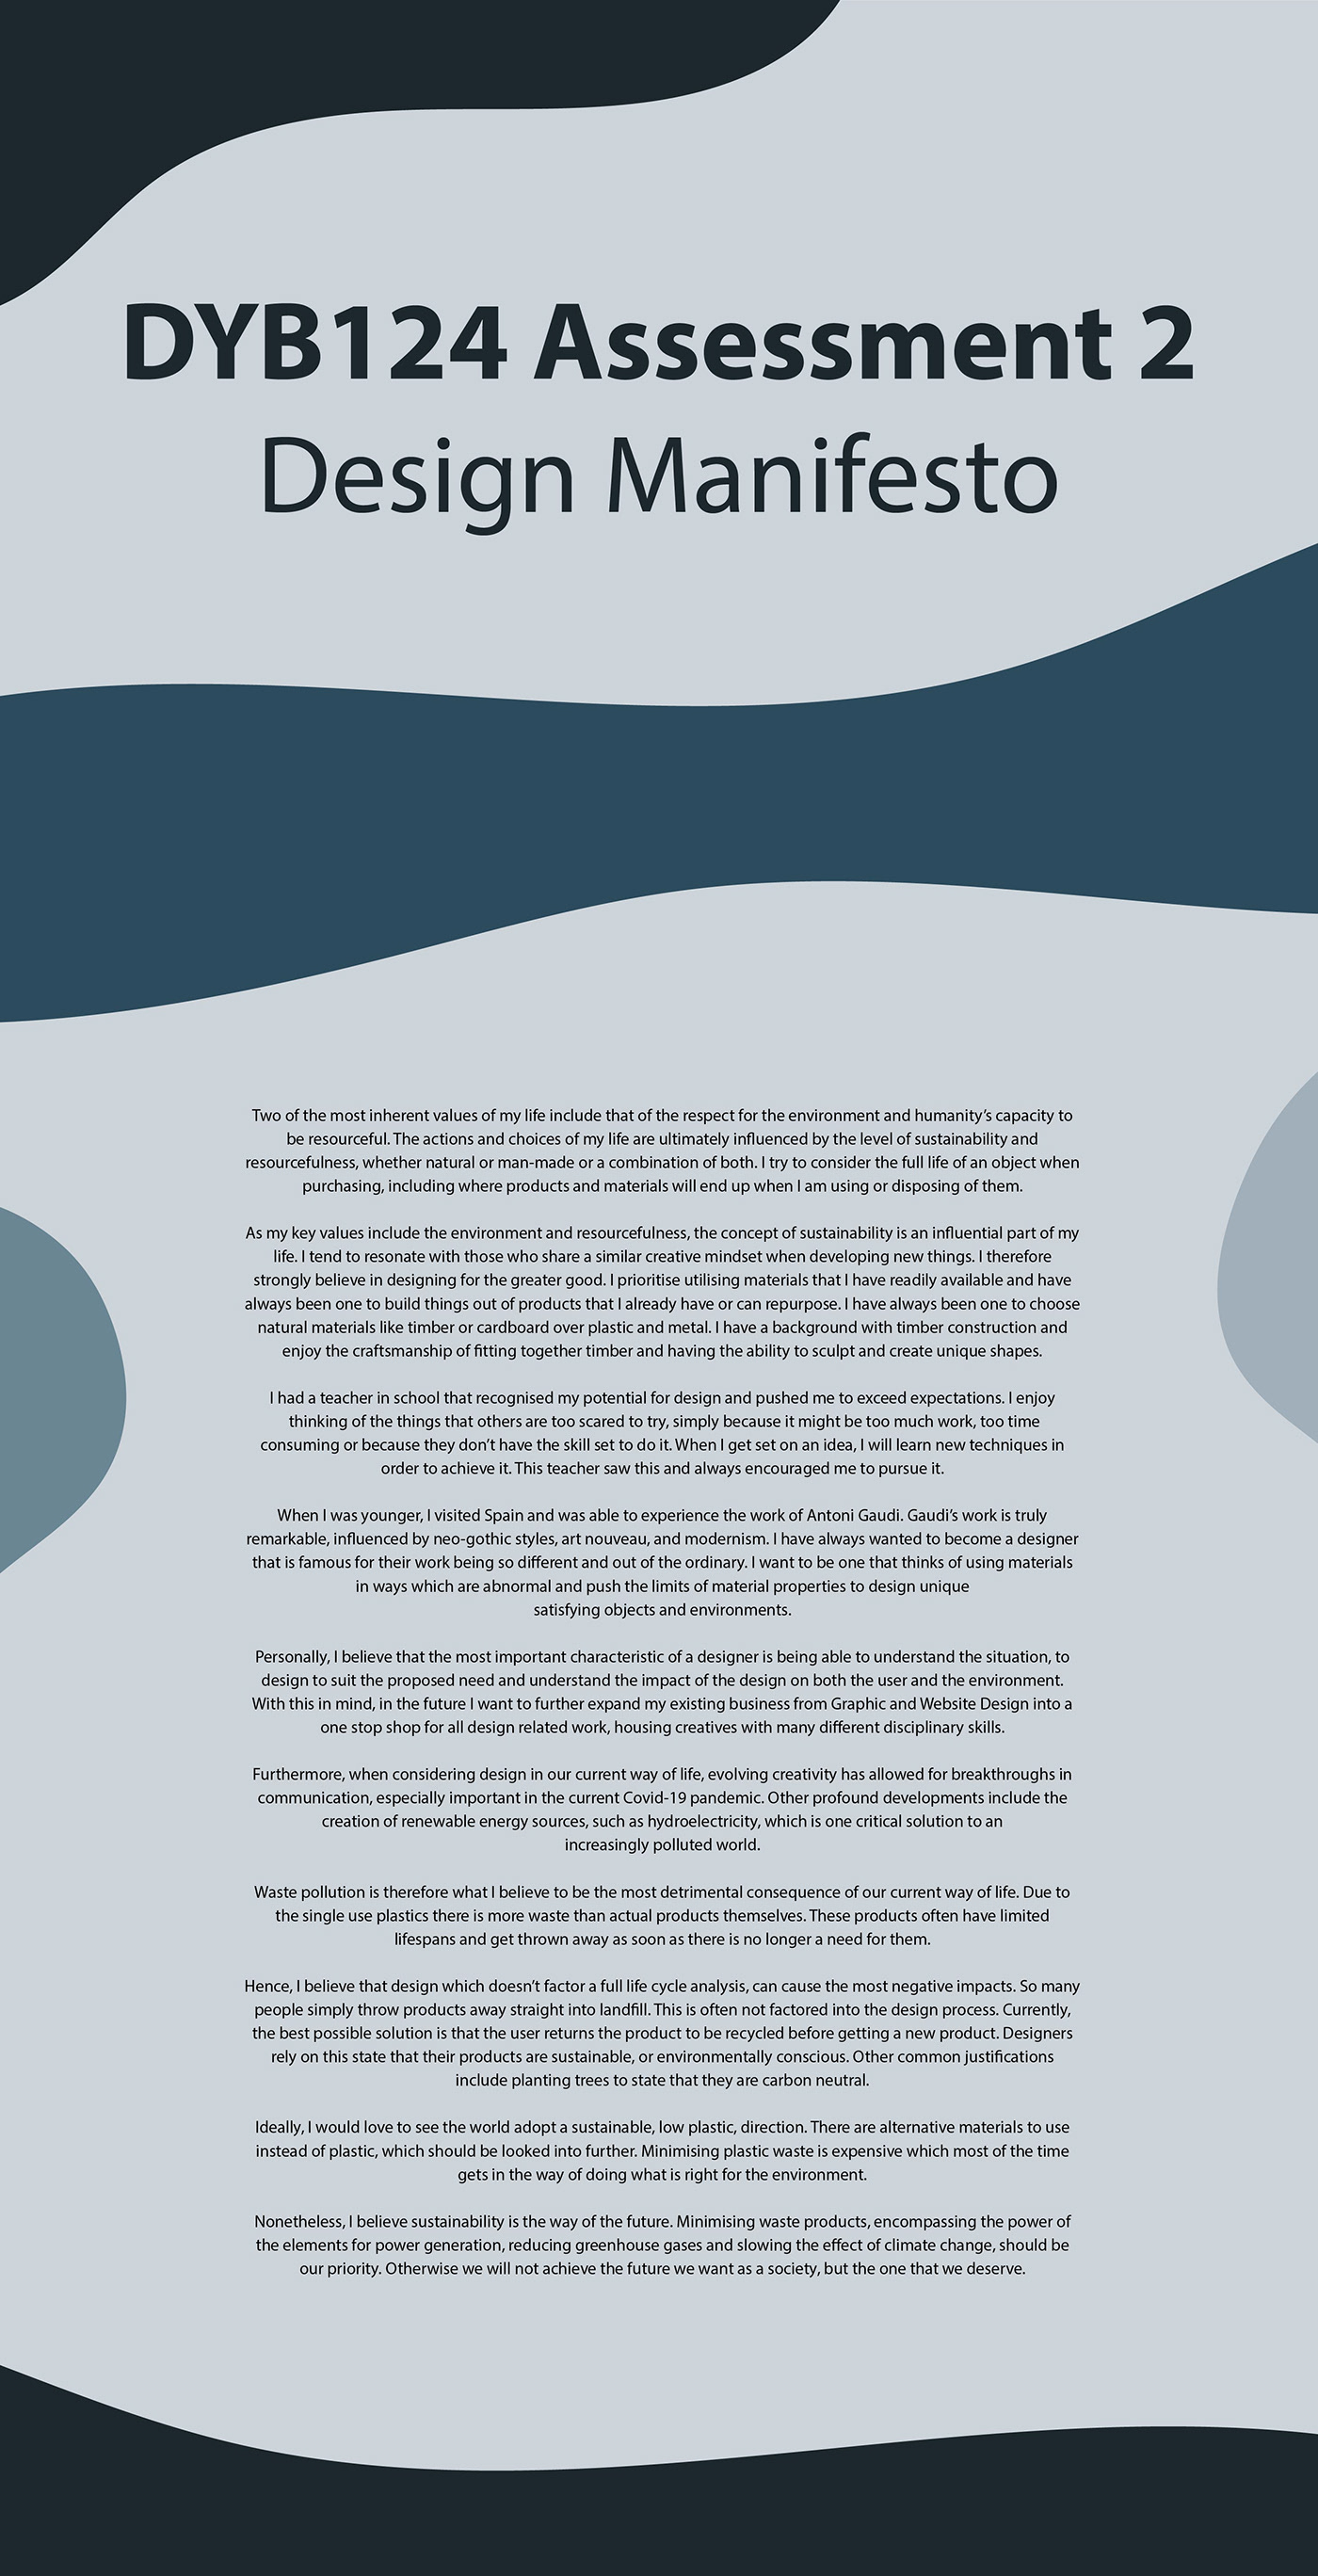 climate change consequences design DYB124 Design Manifesto environment global warming Illustrator manifesto qut sustainablity